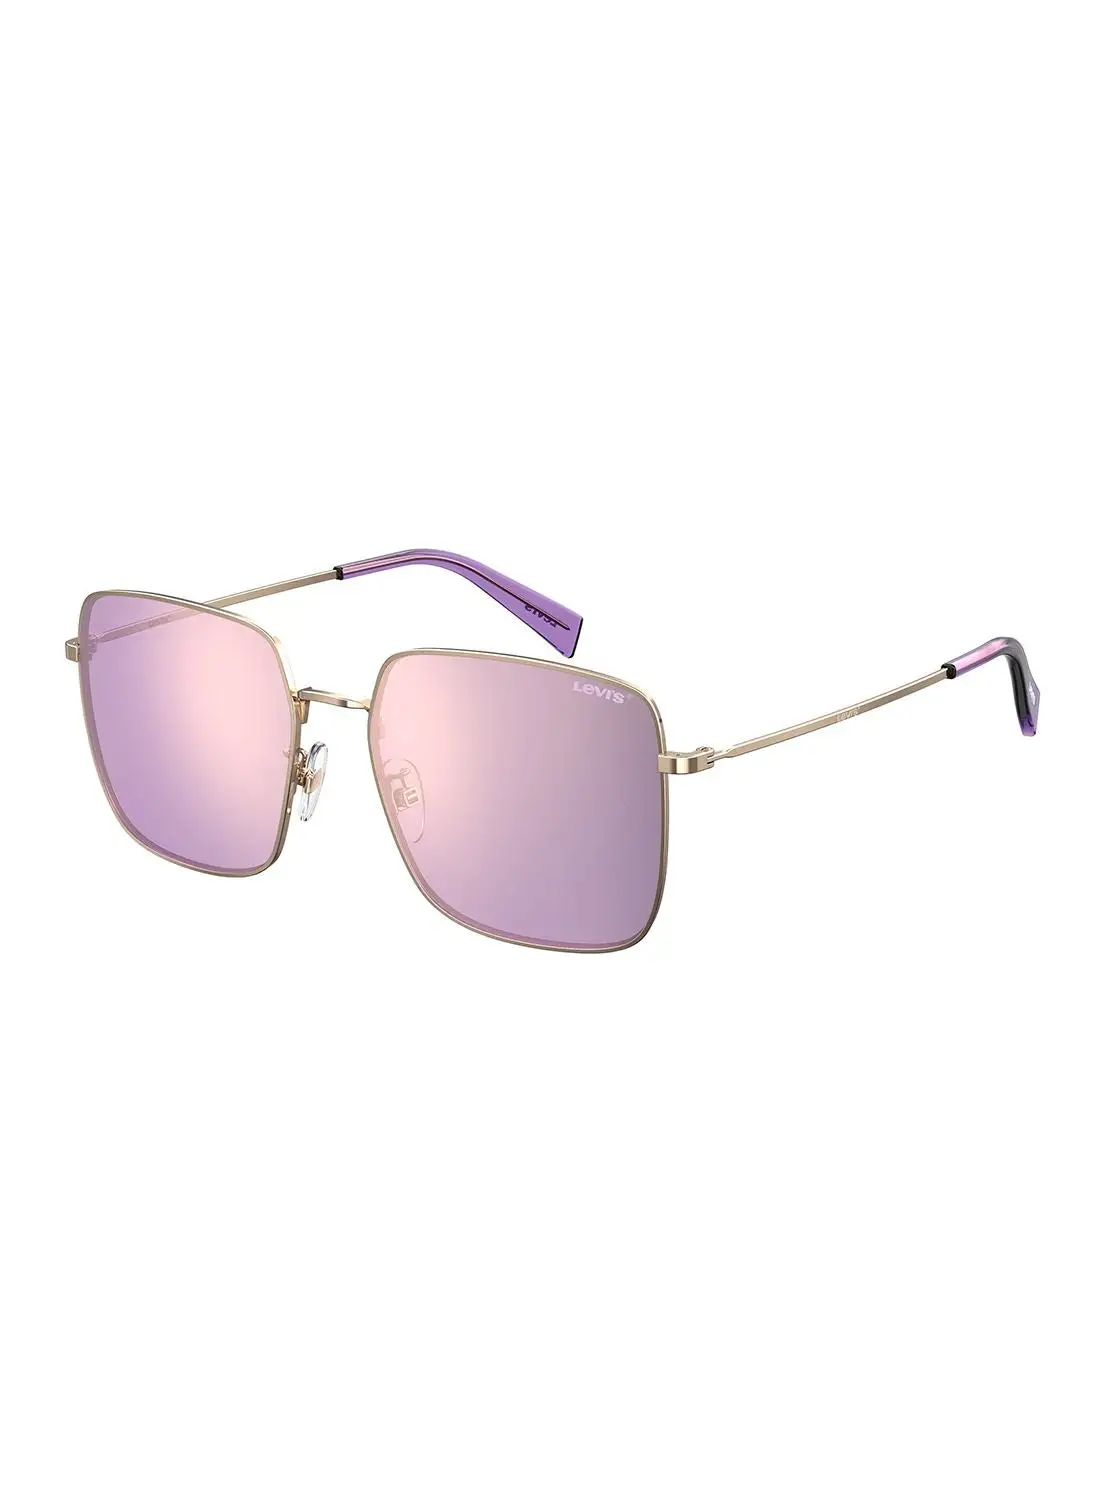 Levi's Women's UV Protection Square Sunglasses - Lv 1007/S Rose Gold 56 - Lens Size: 56 Mm